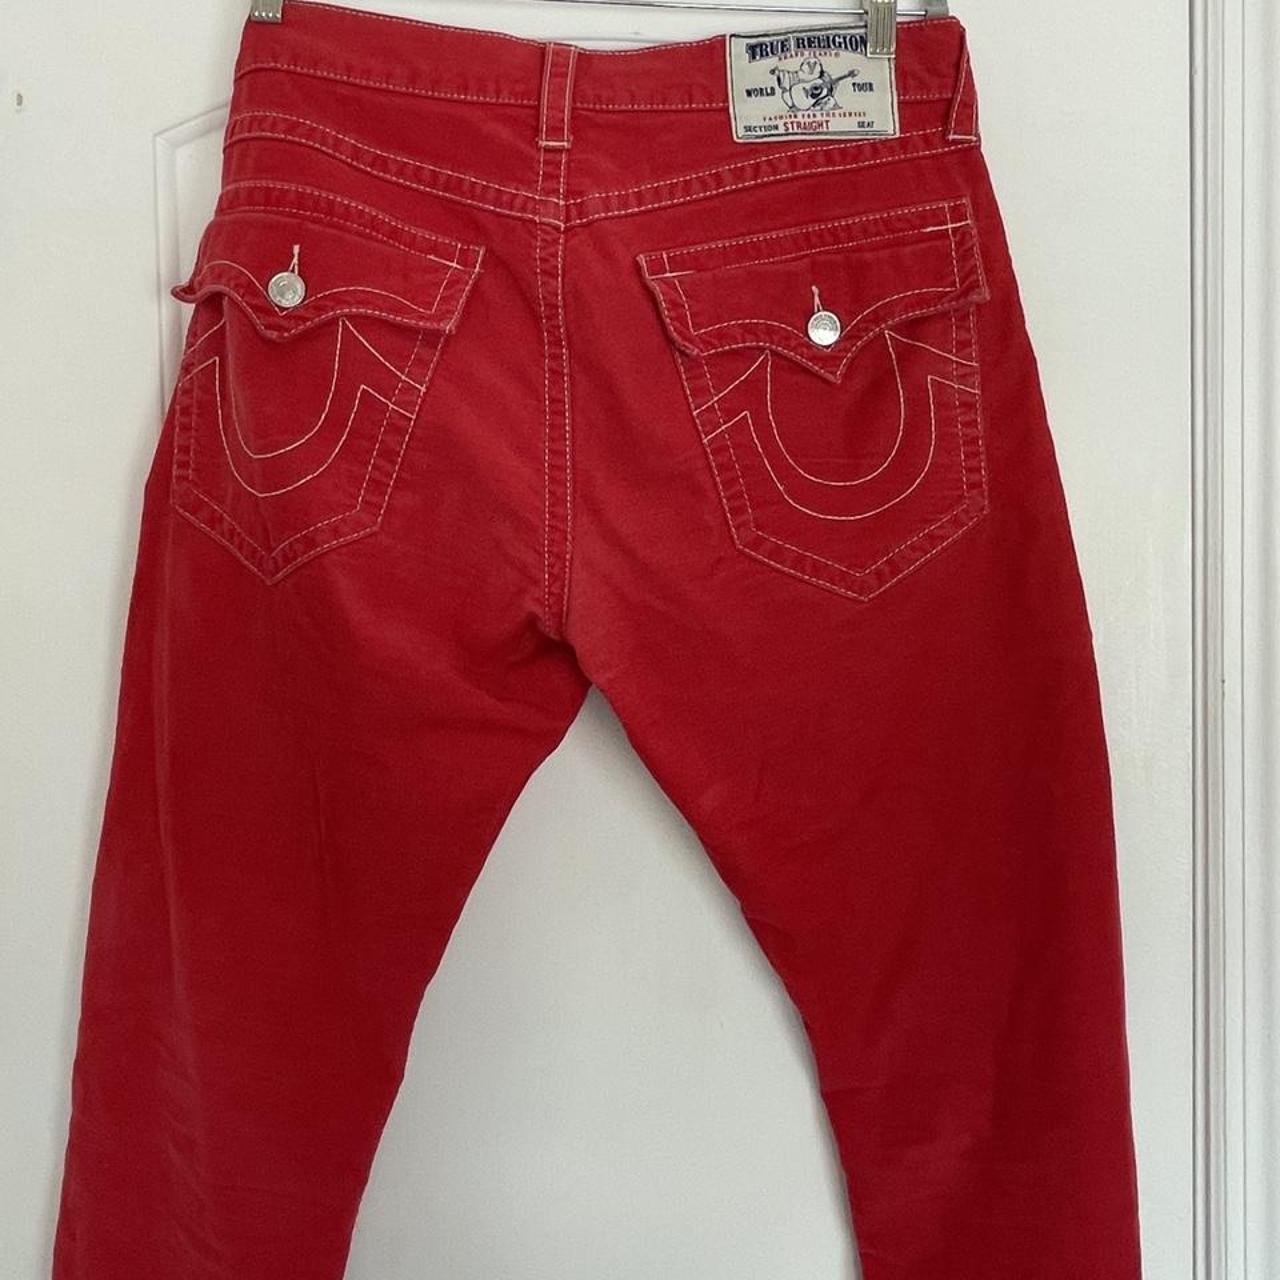 True religion jeans vintage! Rare fit great! No... - Depop